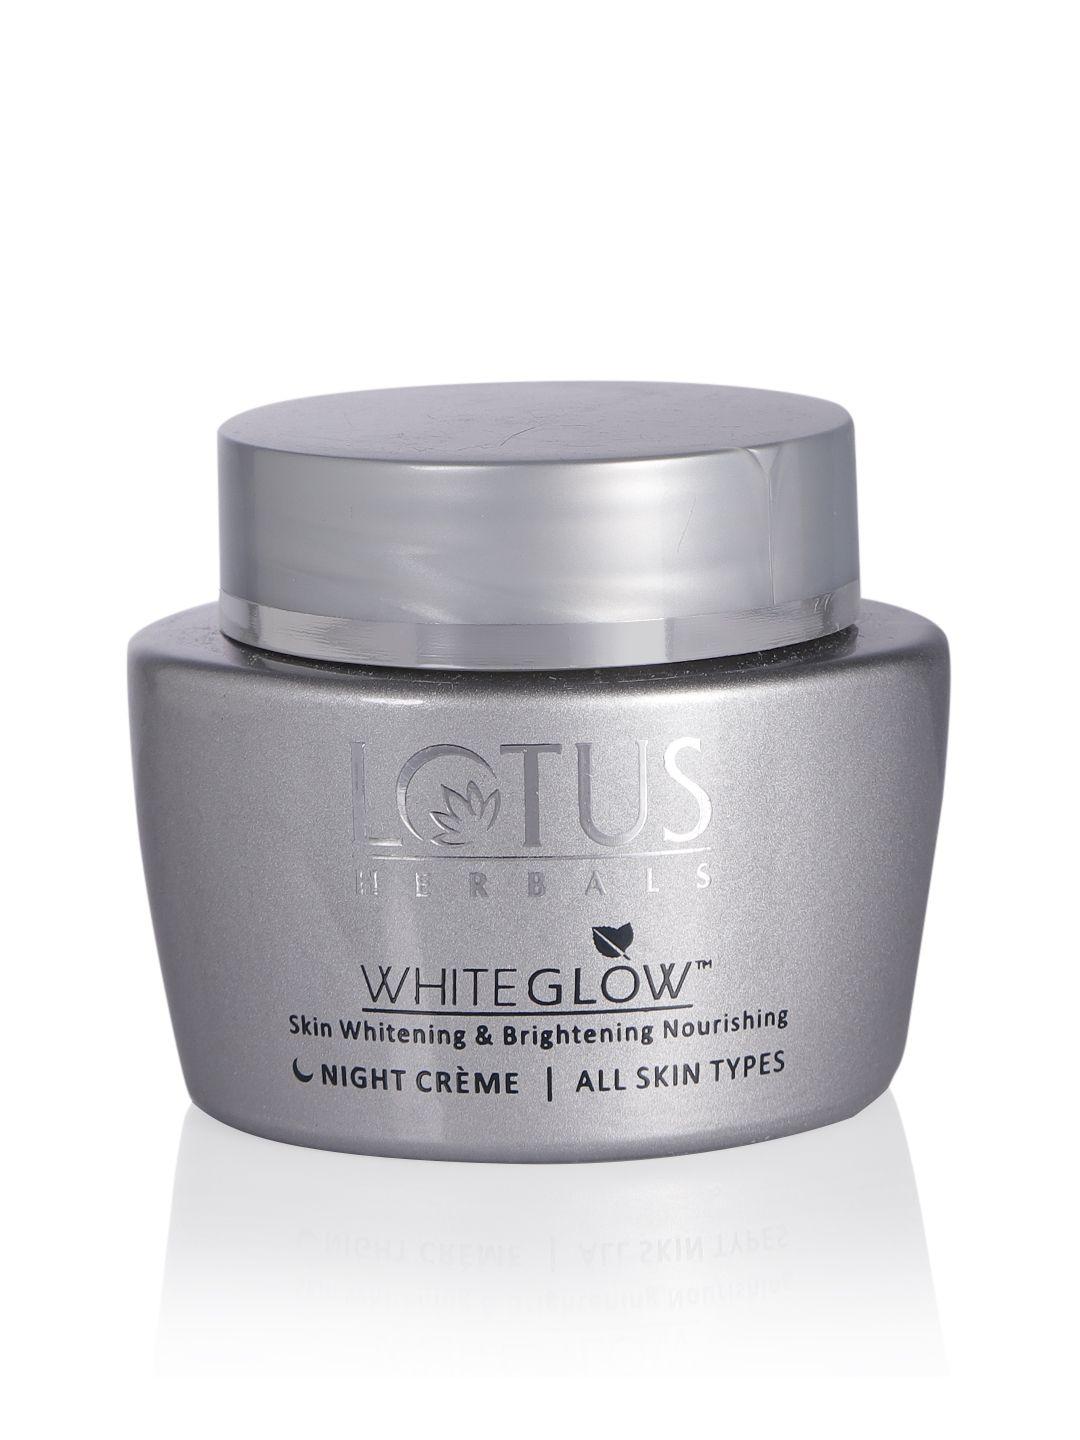 lotus-herbals-women-white-glow-skin-whitening-&-brightening-nourishing-night-creme-40-g